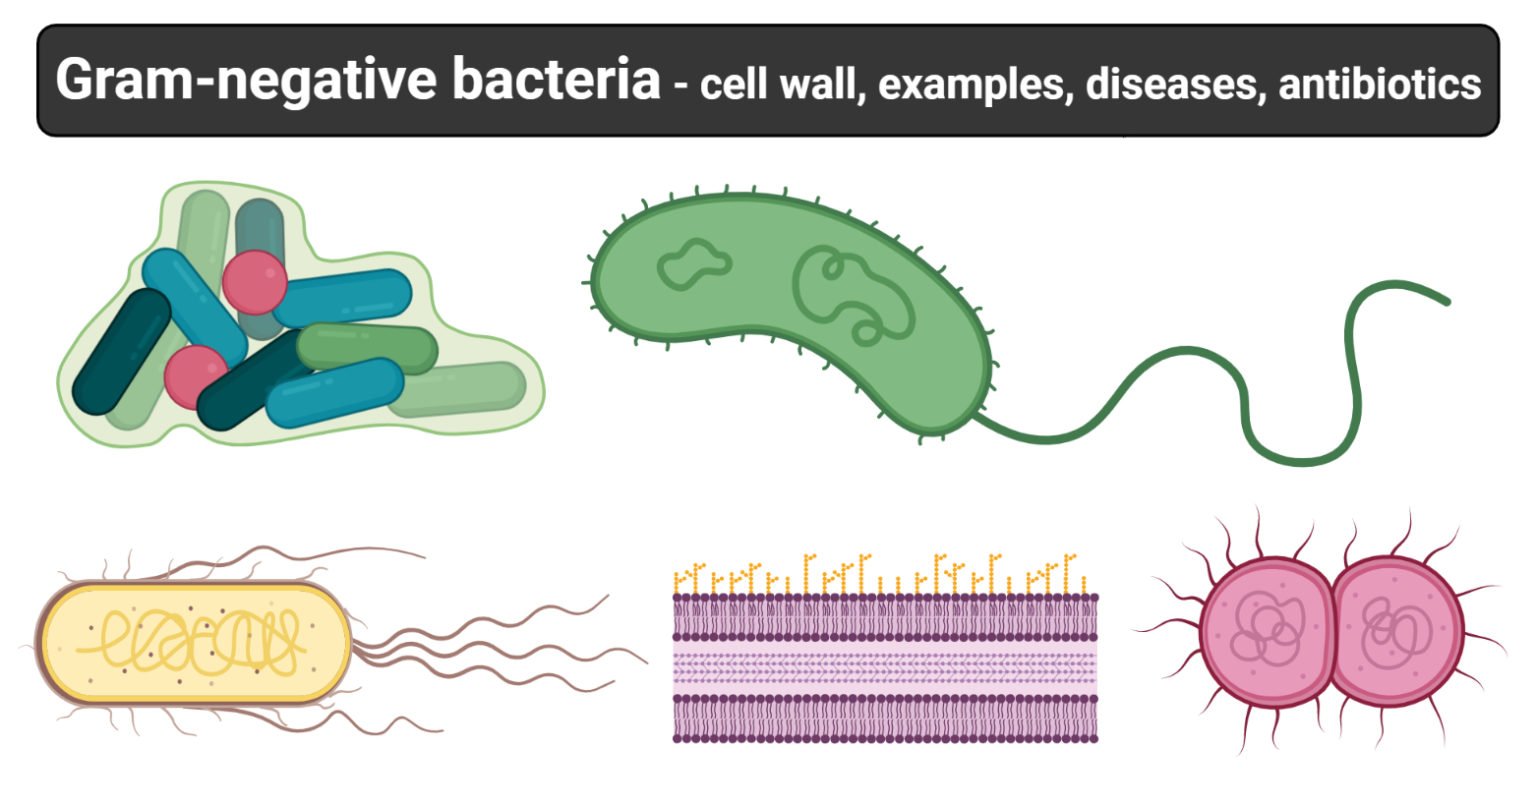 Gram-negative bacteria- cell wall, examples, diseases, antibiotics